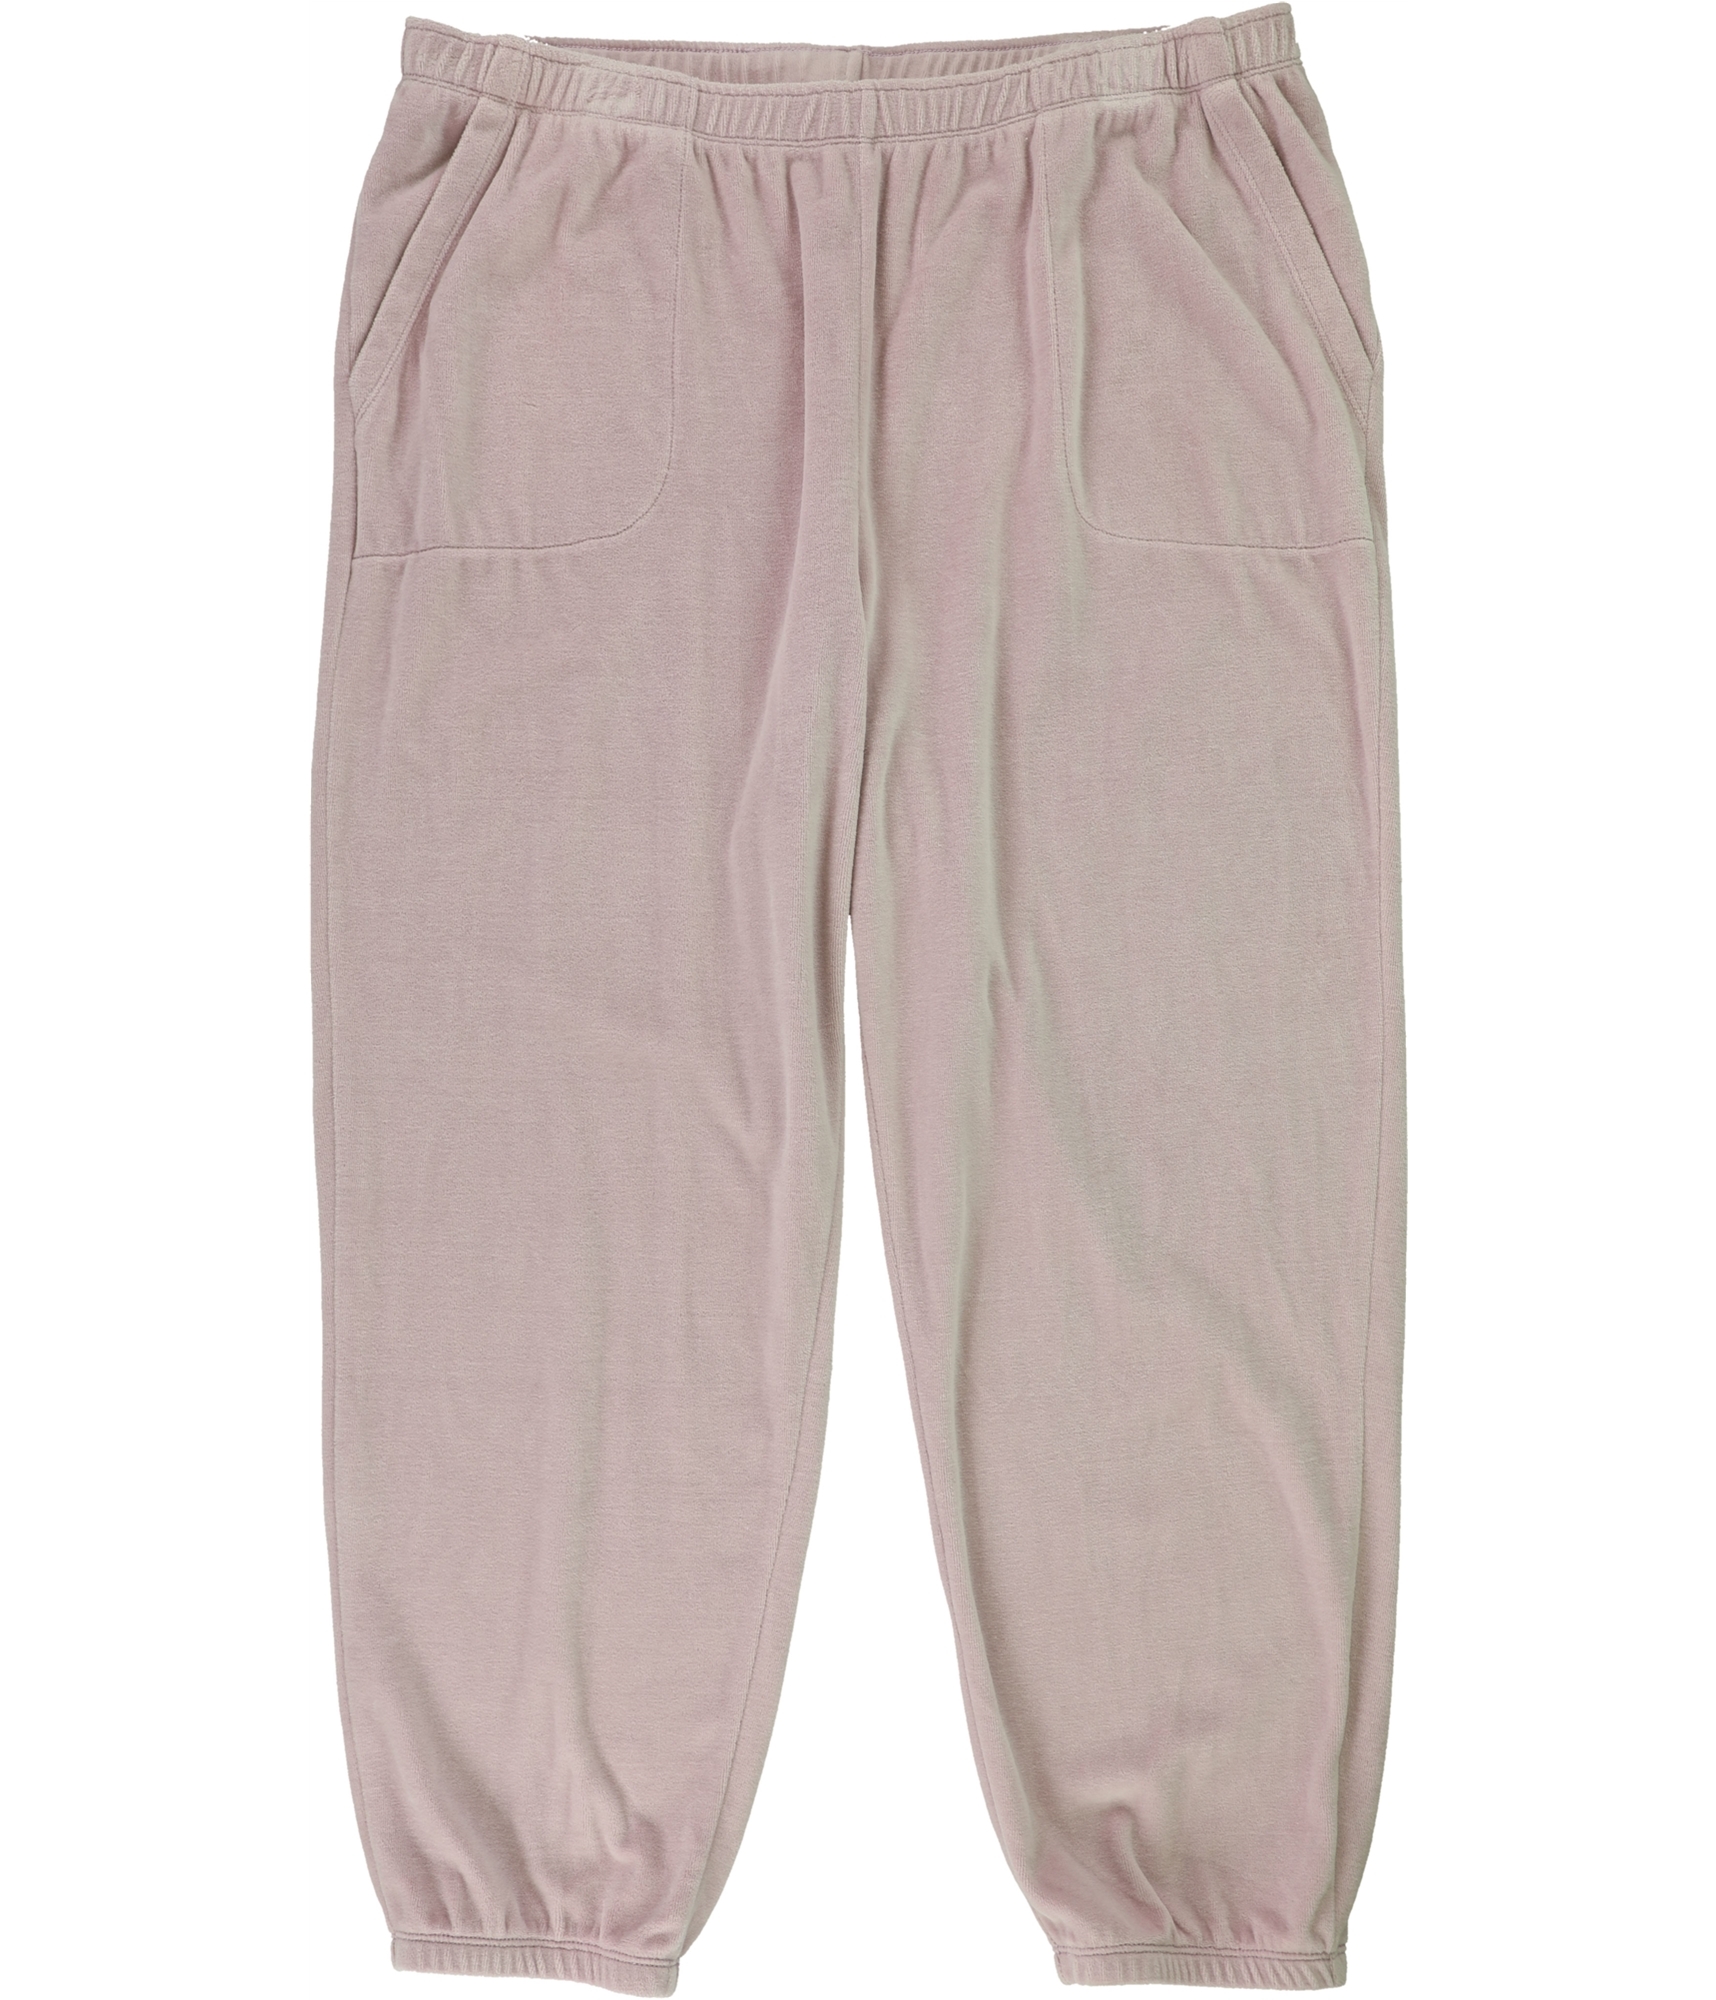 American Eagle Brand Women's Gray Sweatpants - Size Small